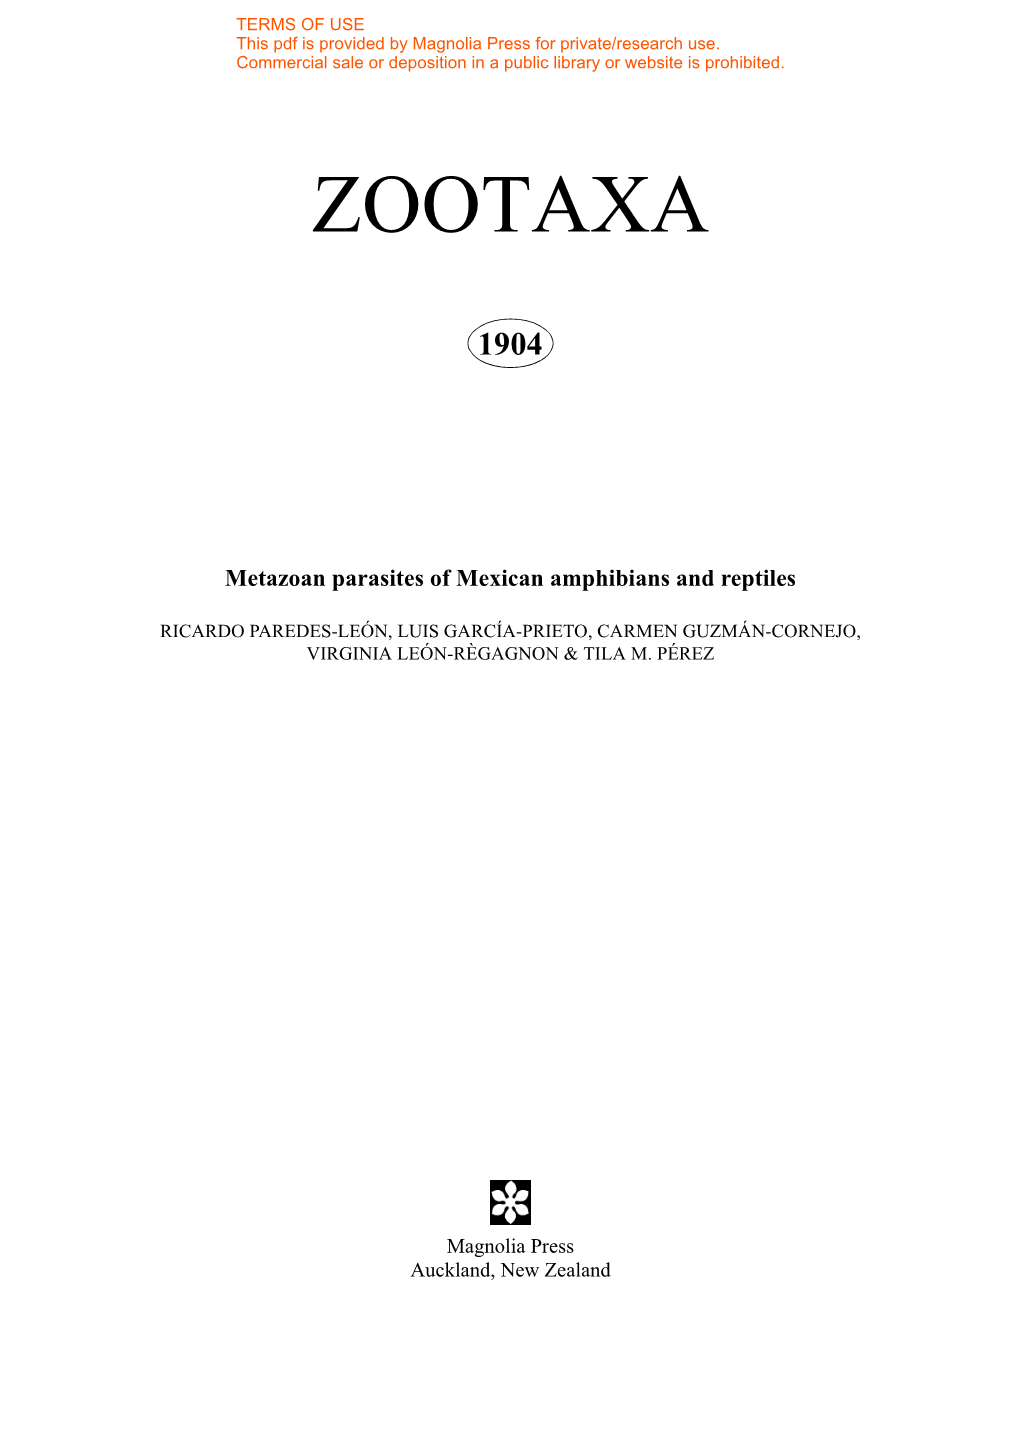 Zootaxa, Metazoan Parasites of Mexican Amphibians and Reptiles